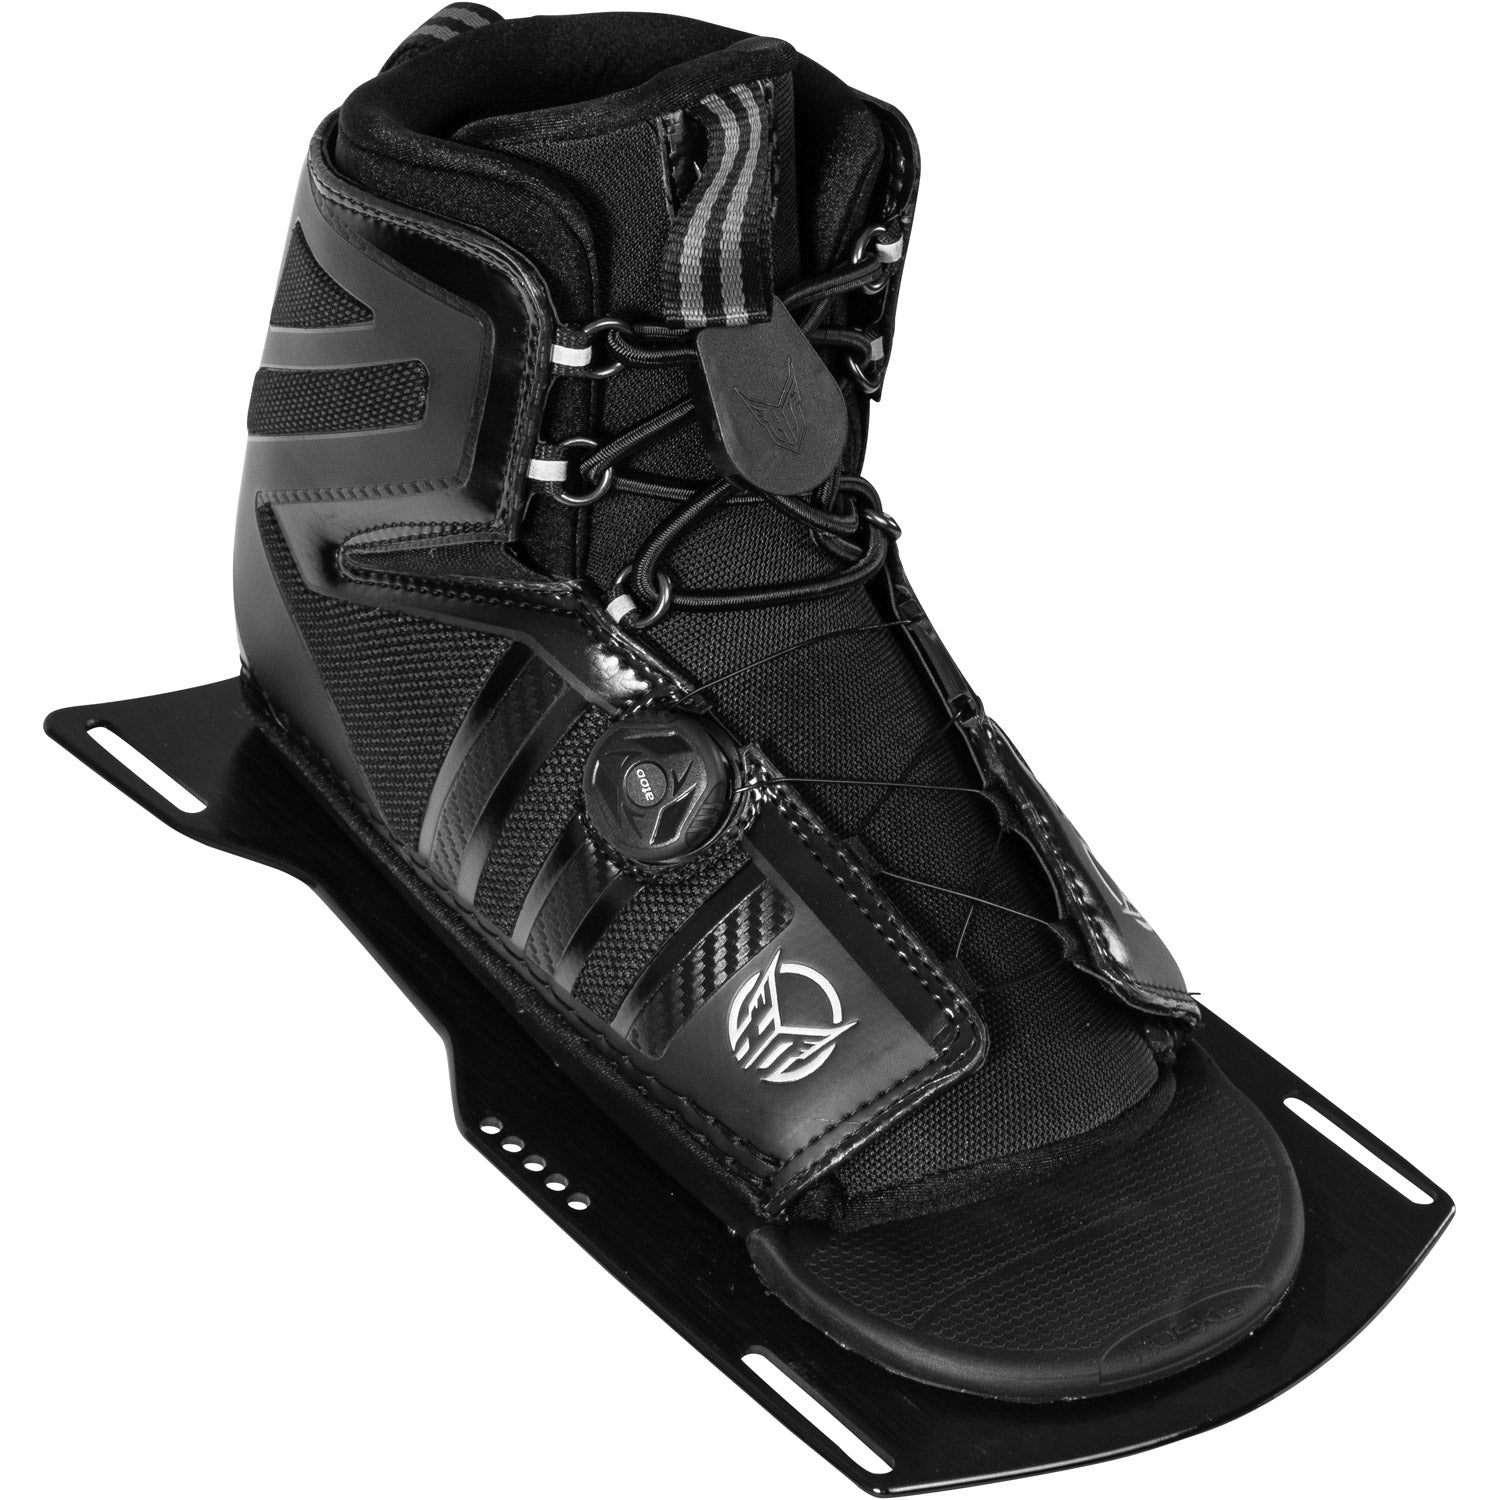 Stance 130 Atop Slalom Ski Boot